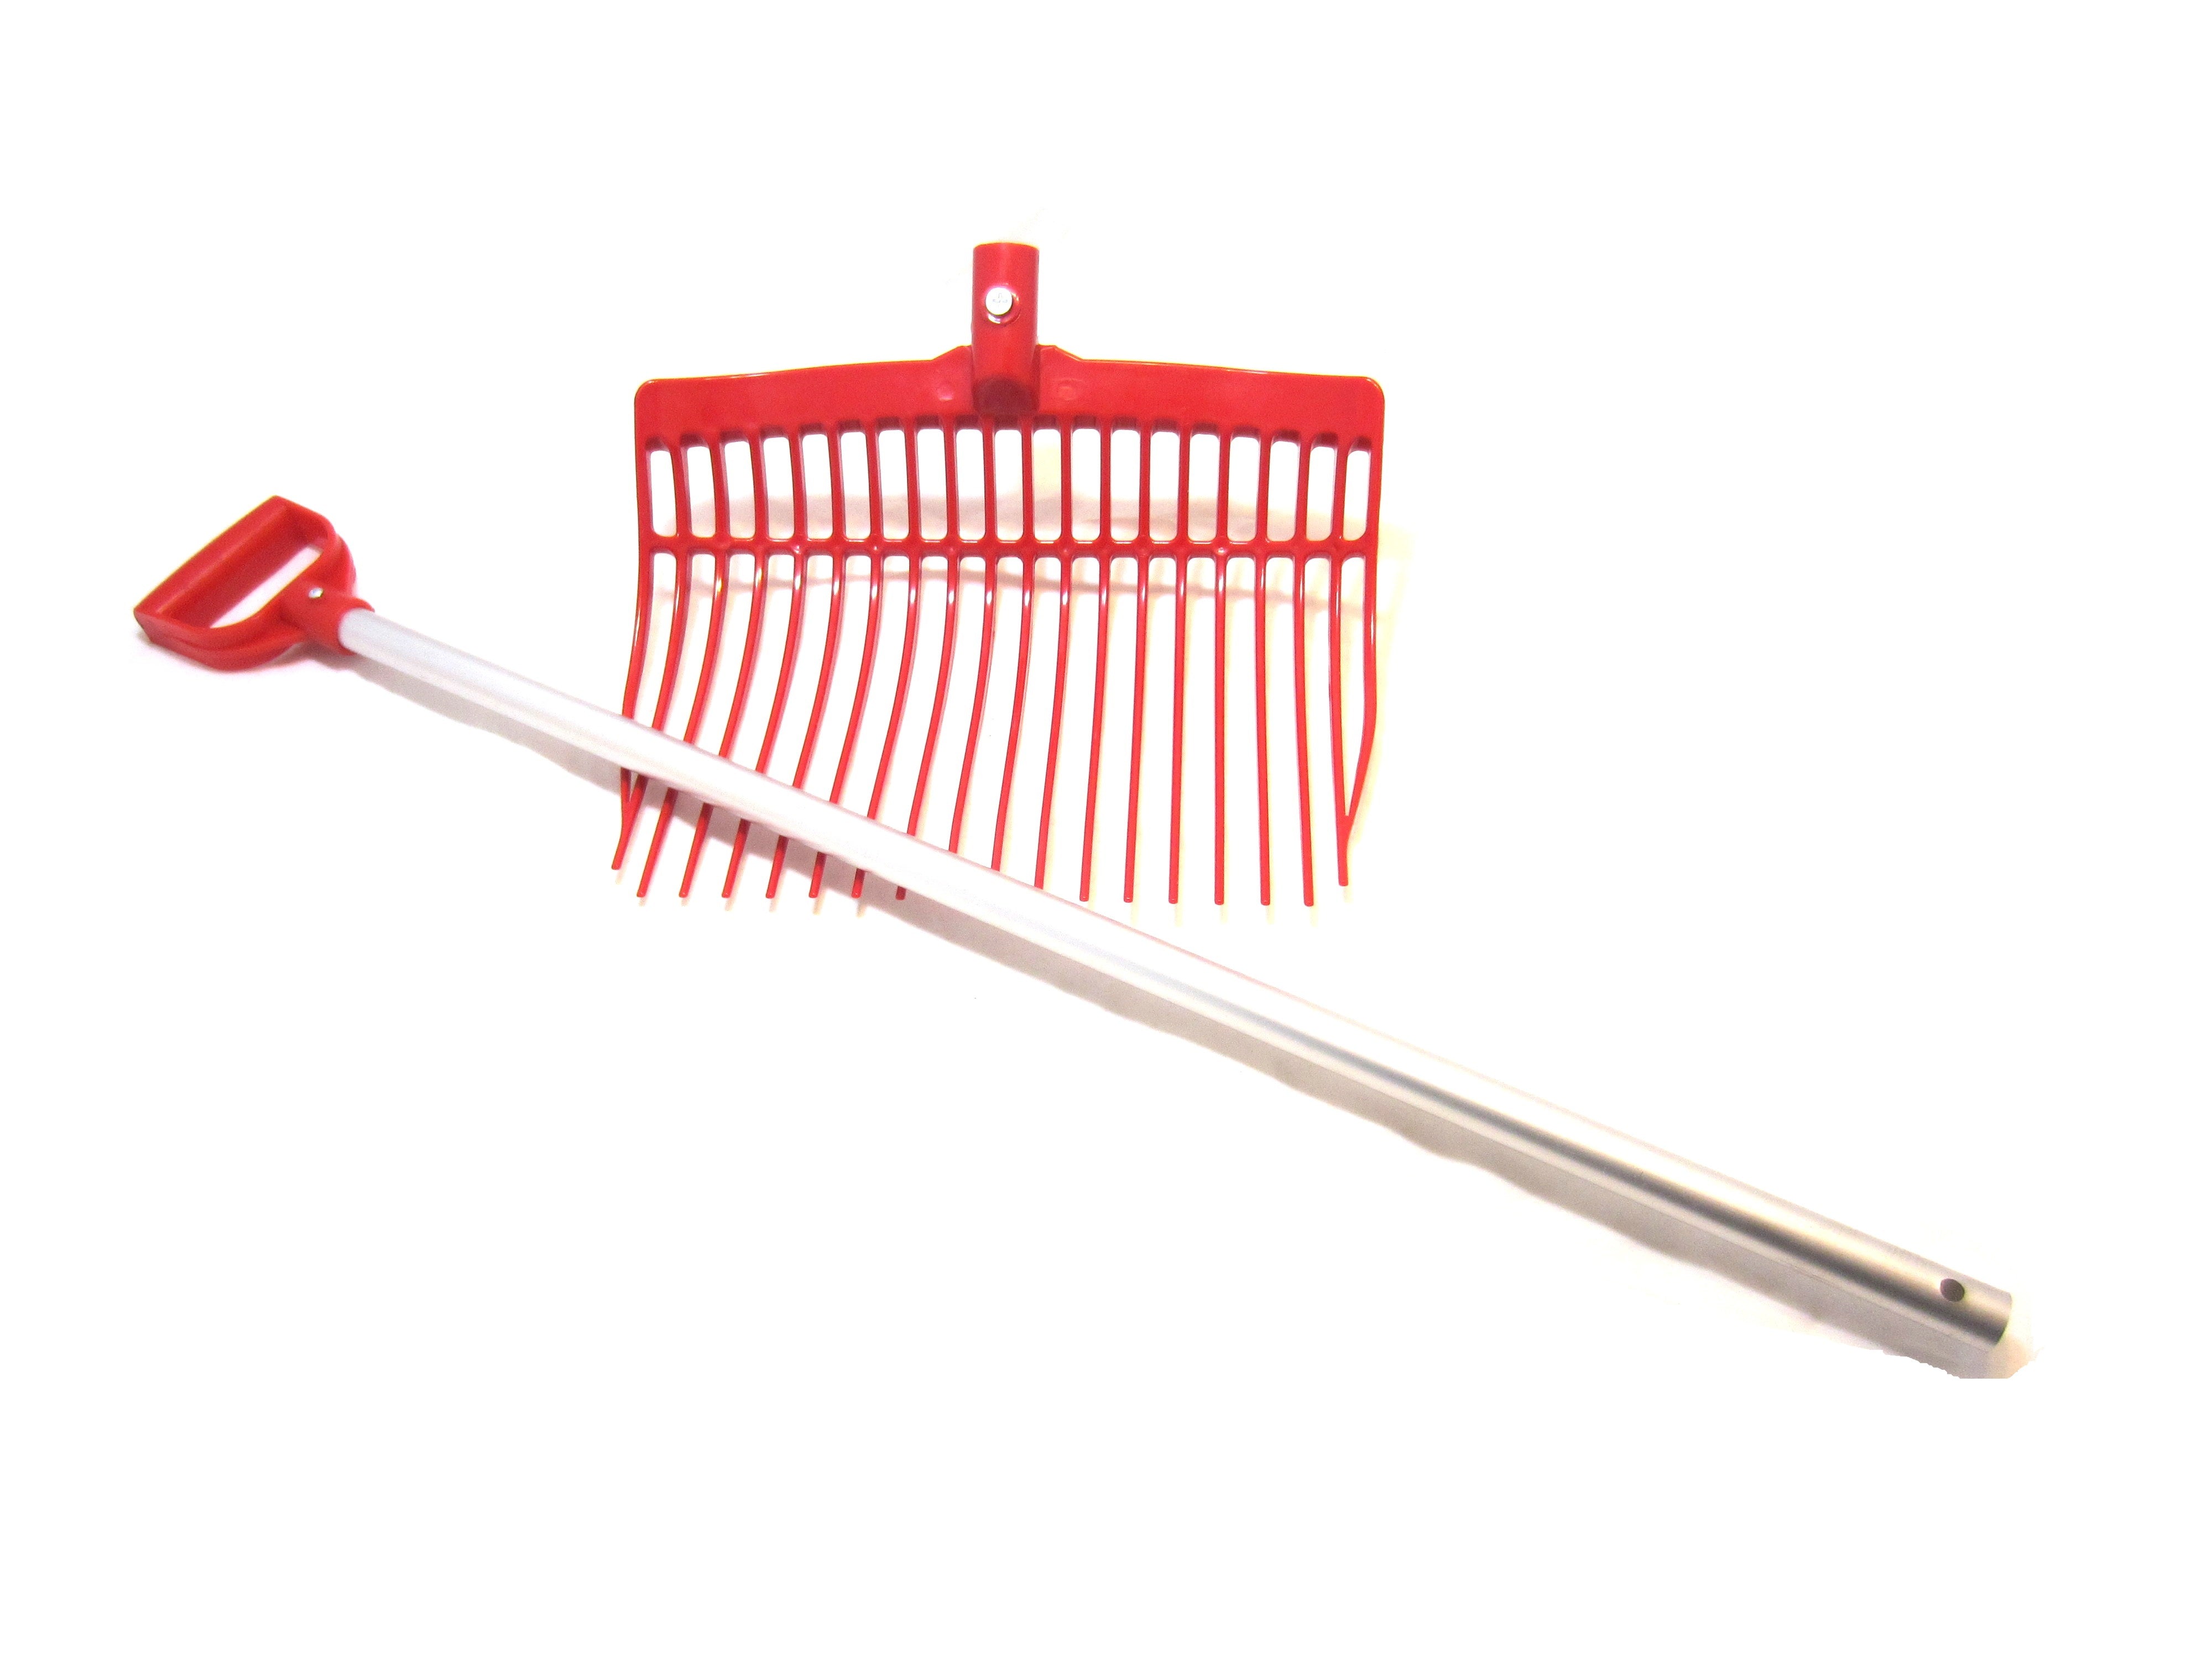 Lightweight pitchfork, Swedish fork, Bollenfork complete with handle in red